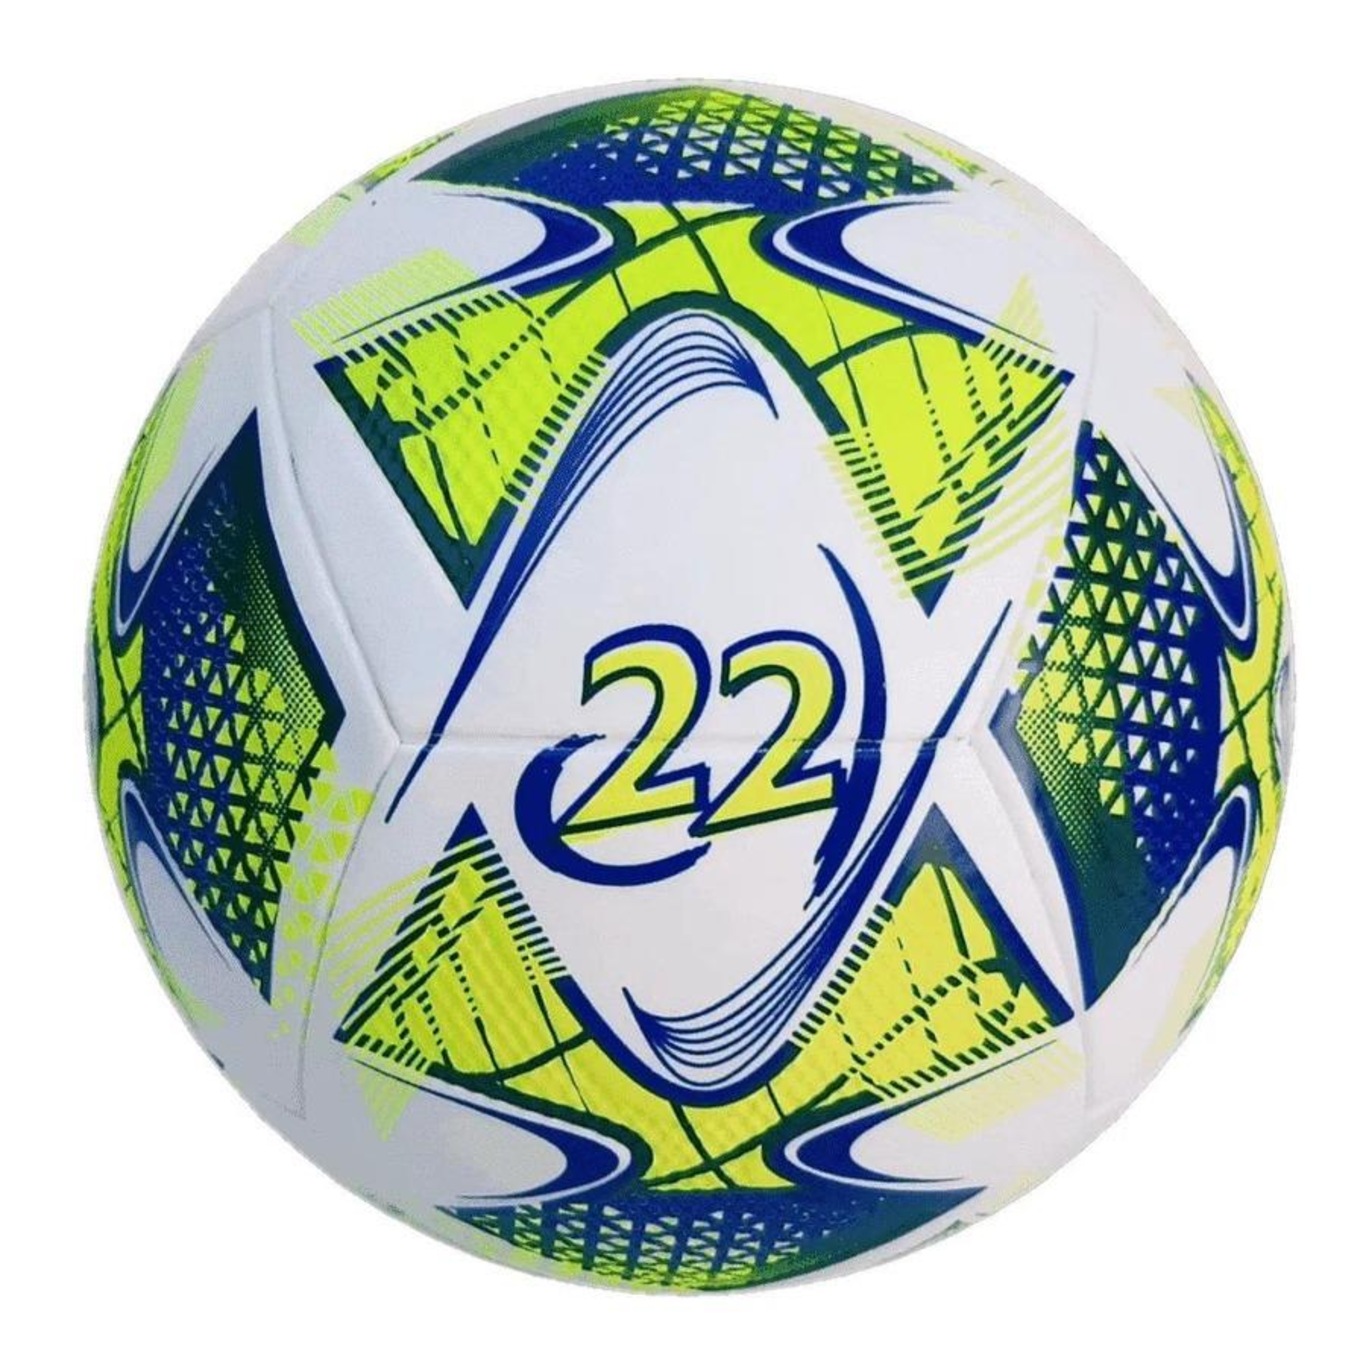 Bola de Futebol Society Penalty BR 70 Branca+Amarela+Preta - Top Radical